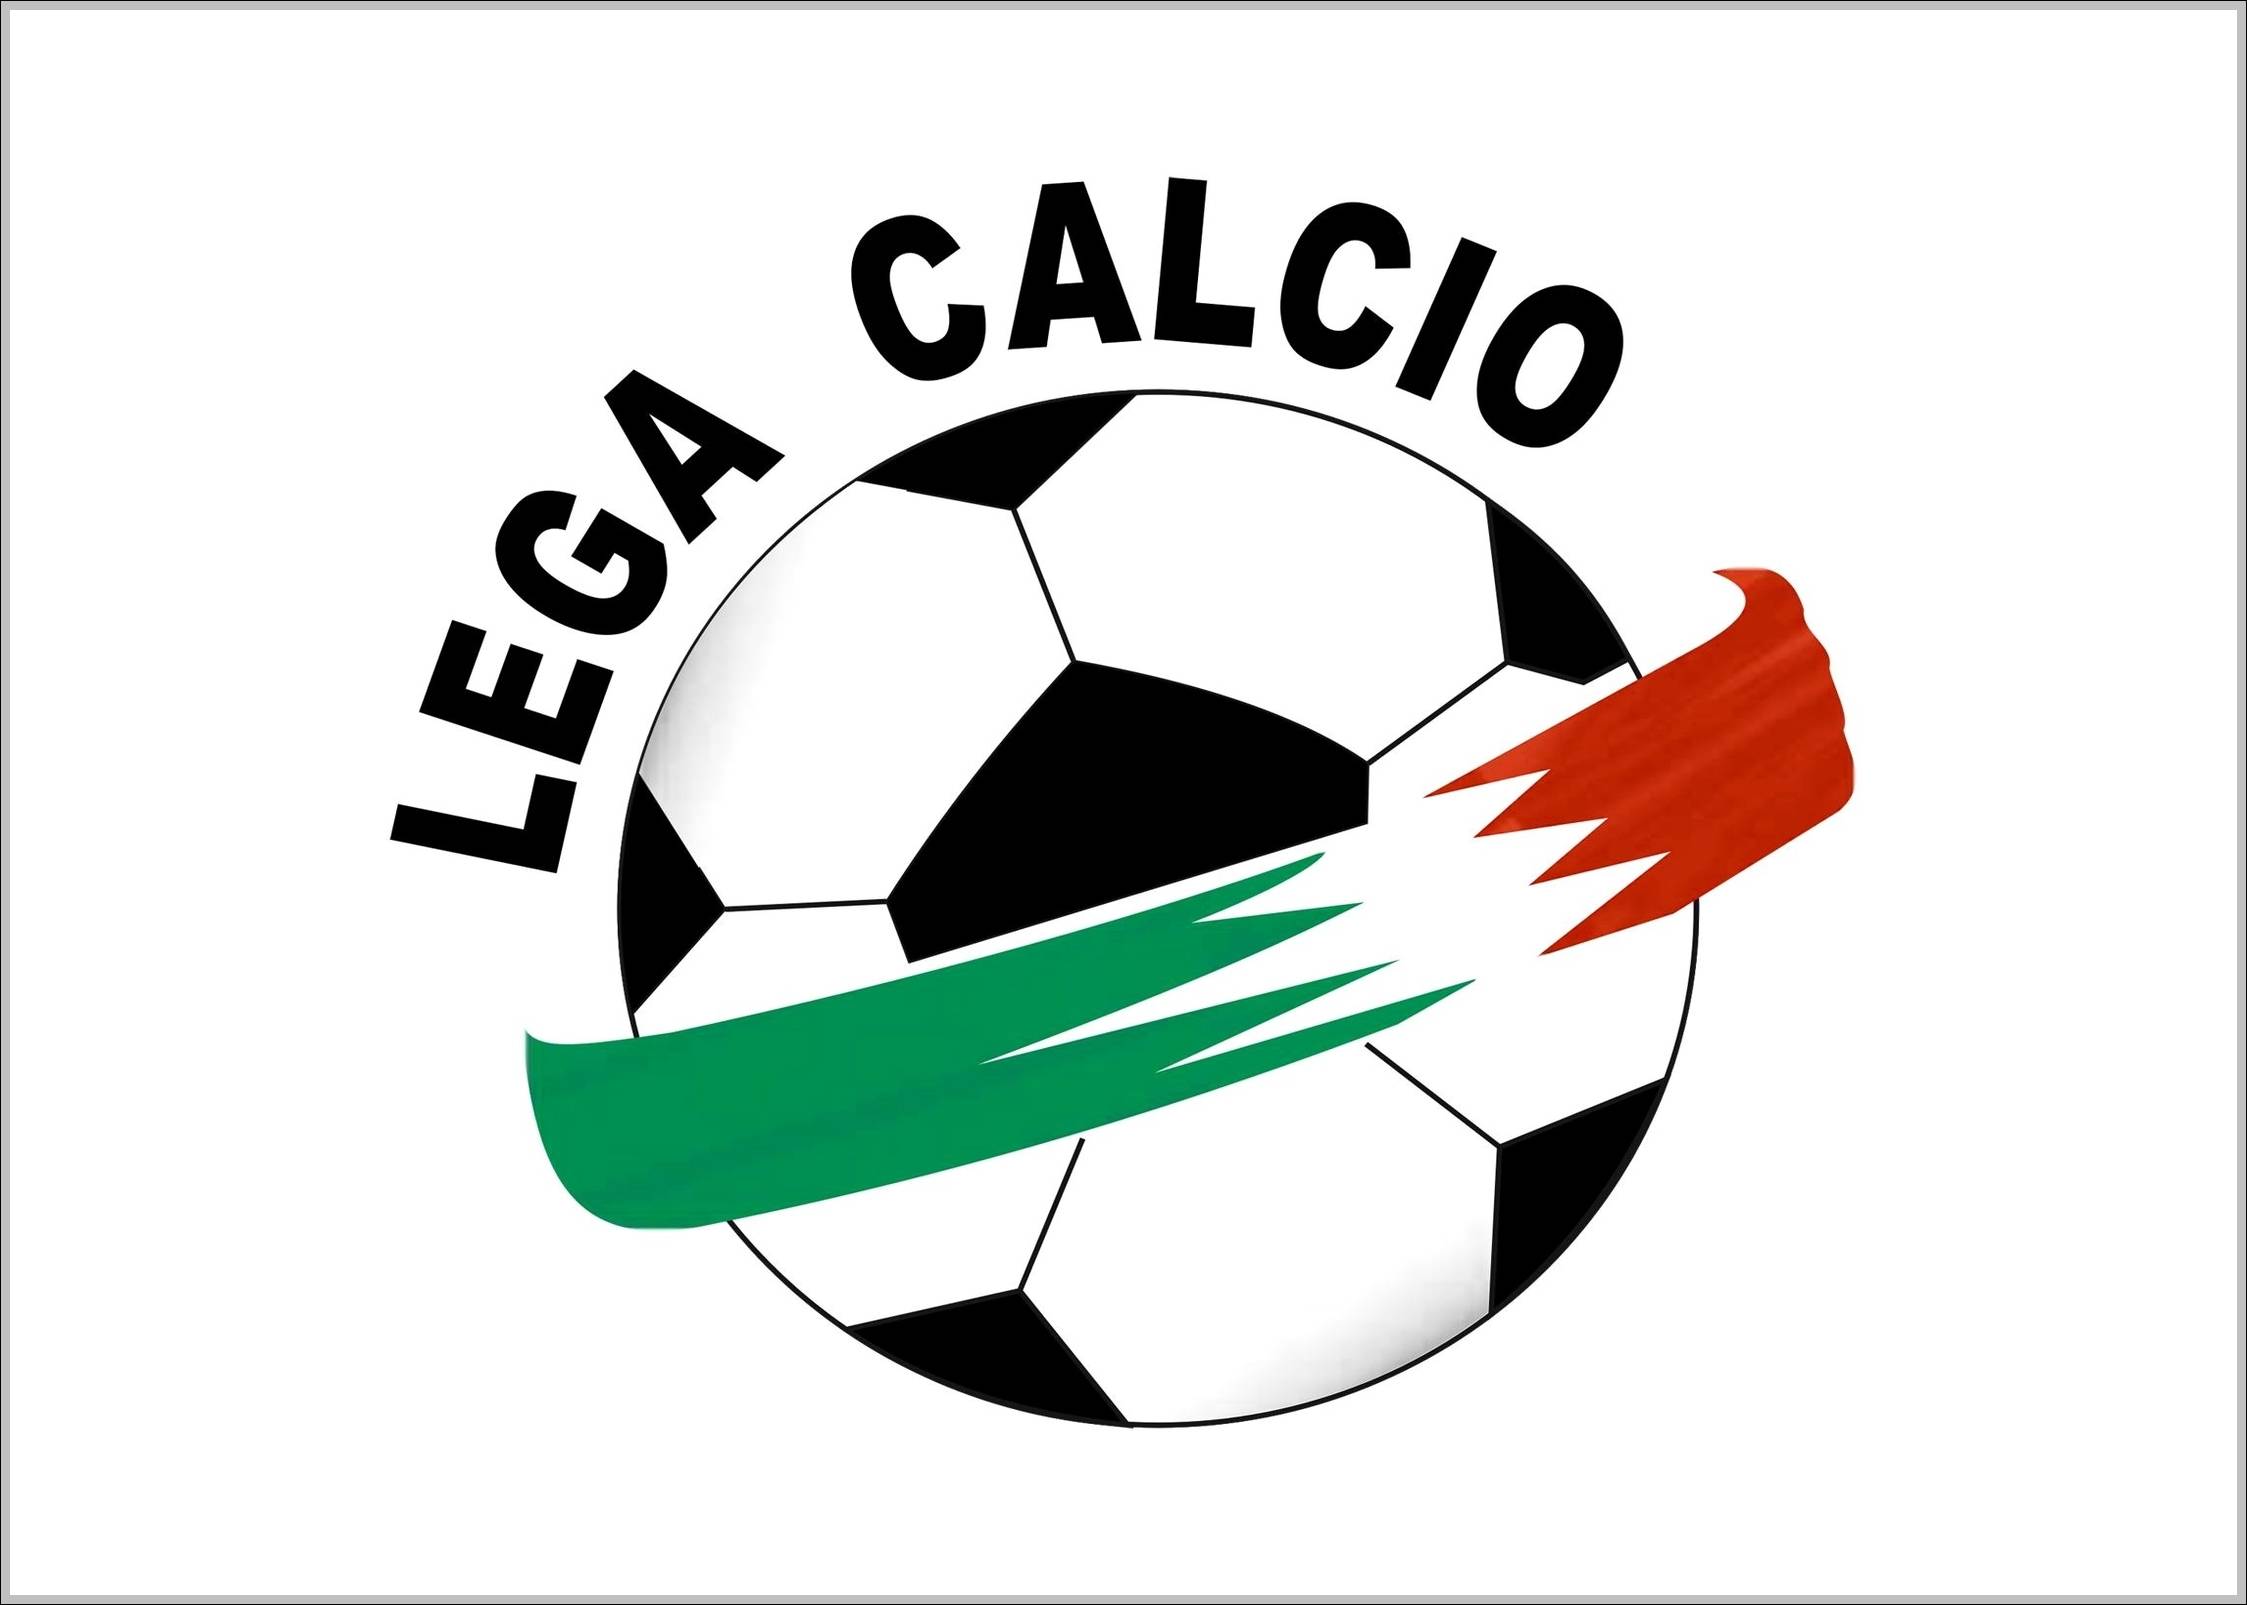 Lega Calcio logo.png